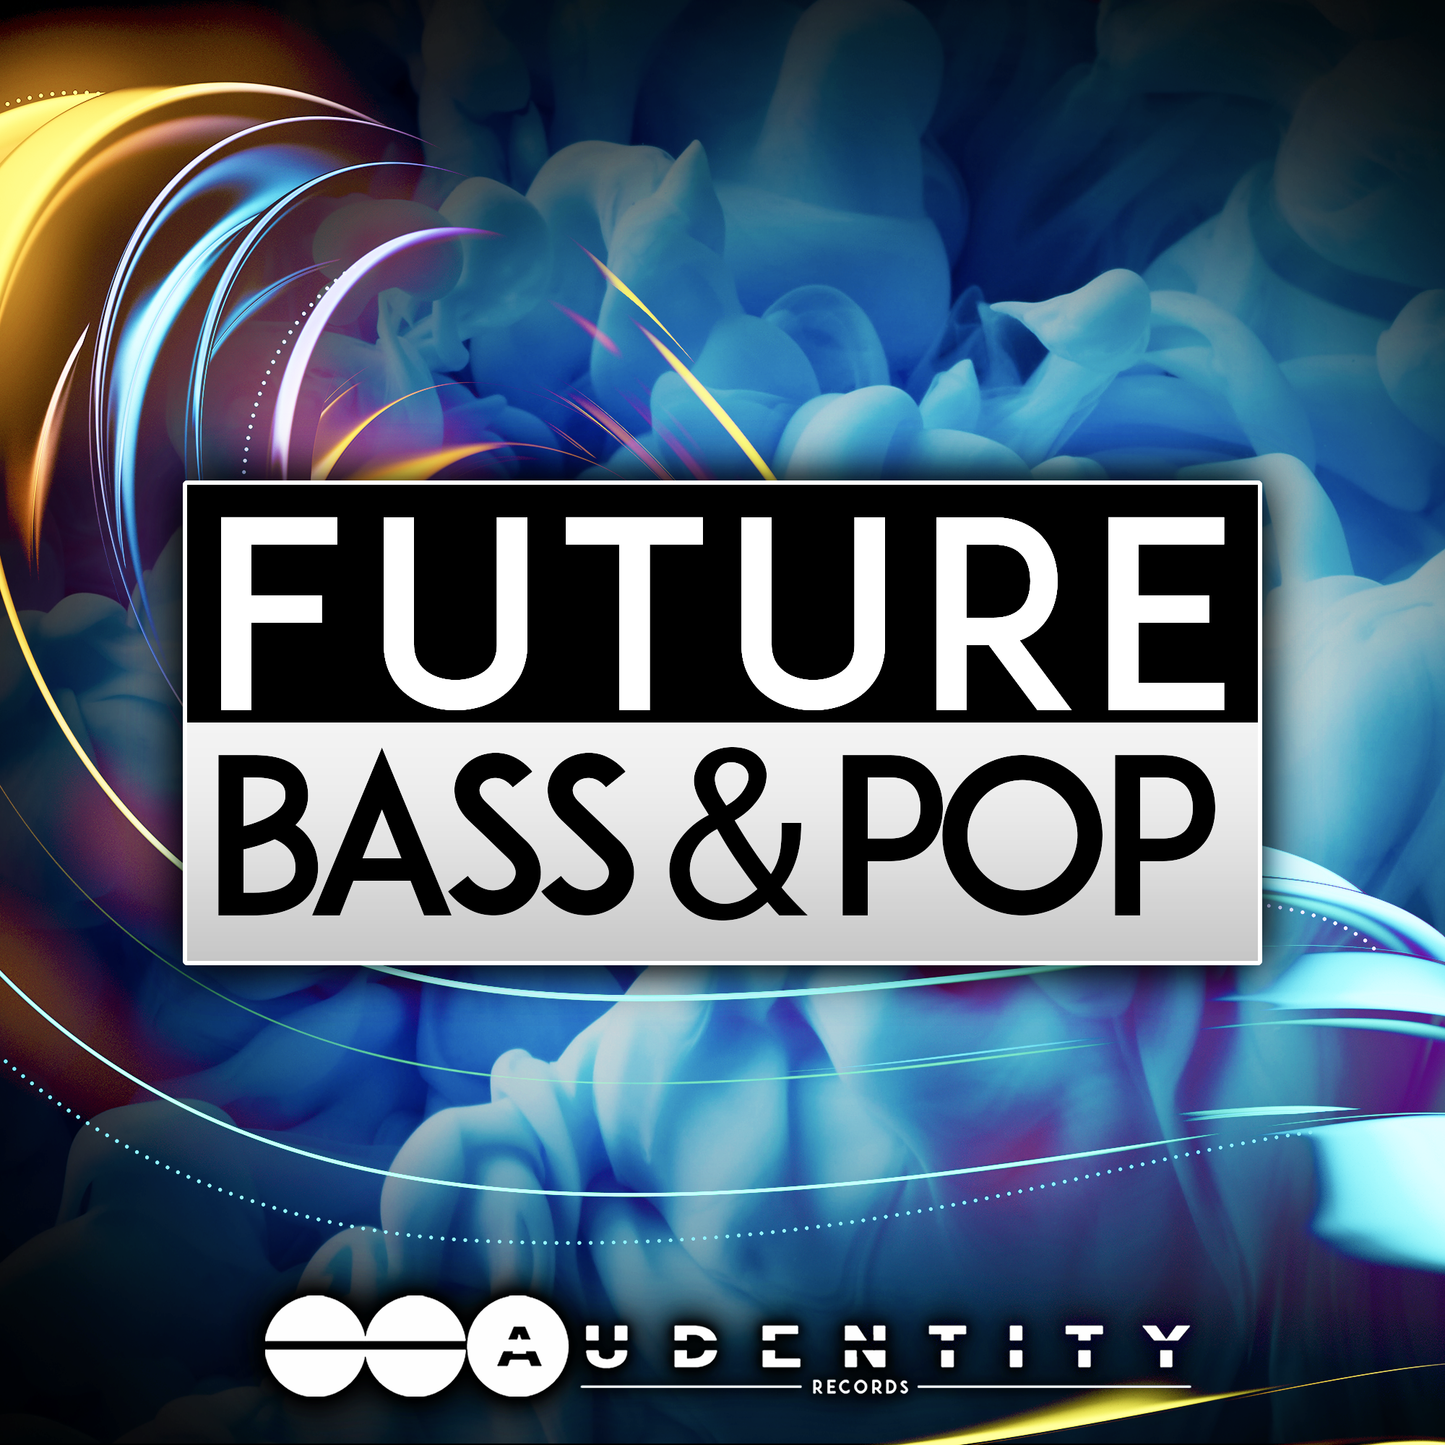 Future Bass & Pop - Audentity Records | Samplestore